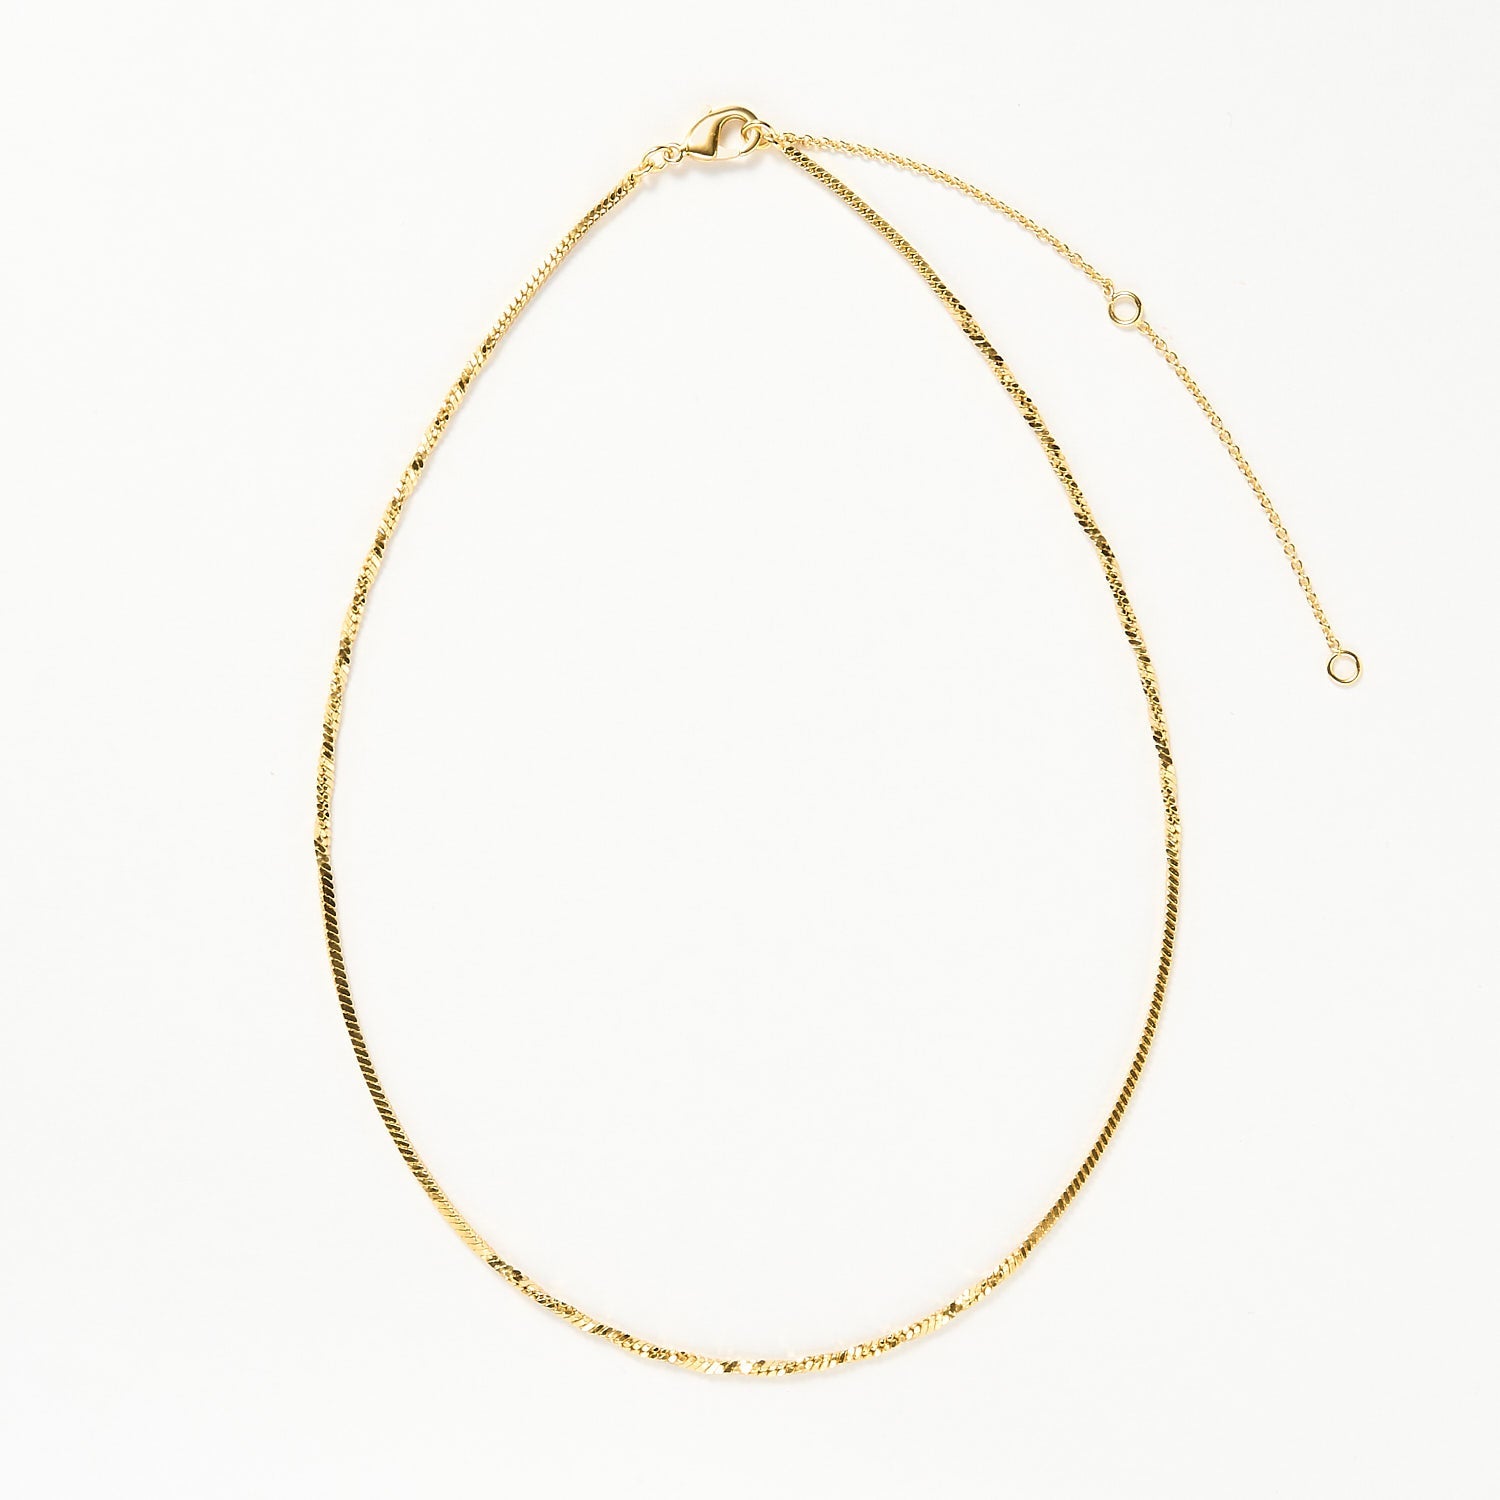 Maldives chain necklace - Gold